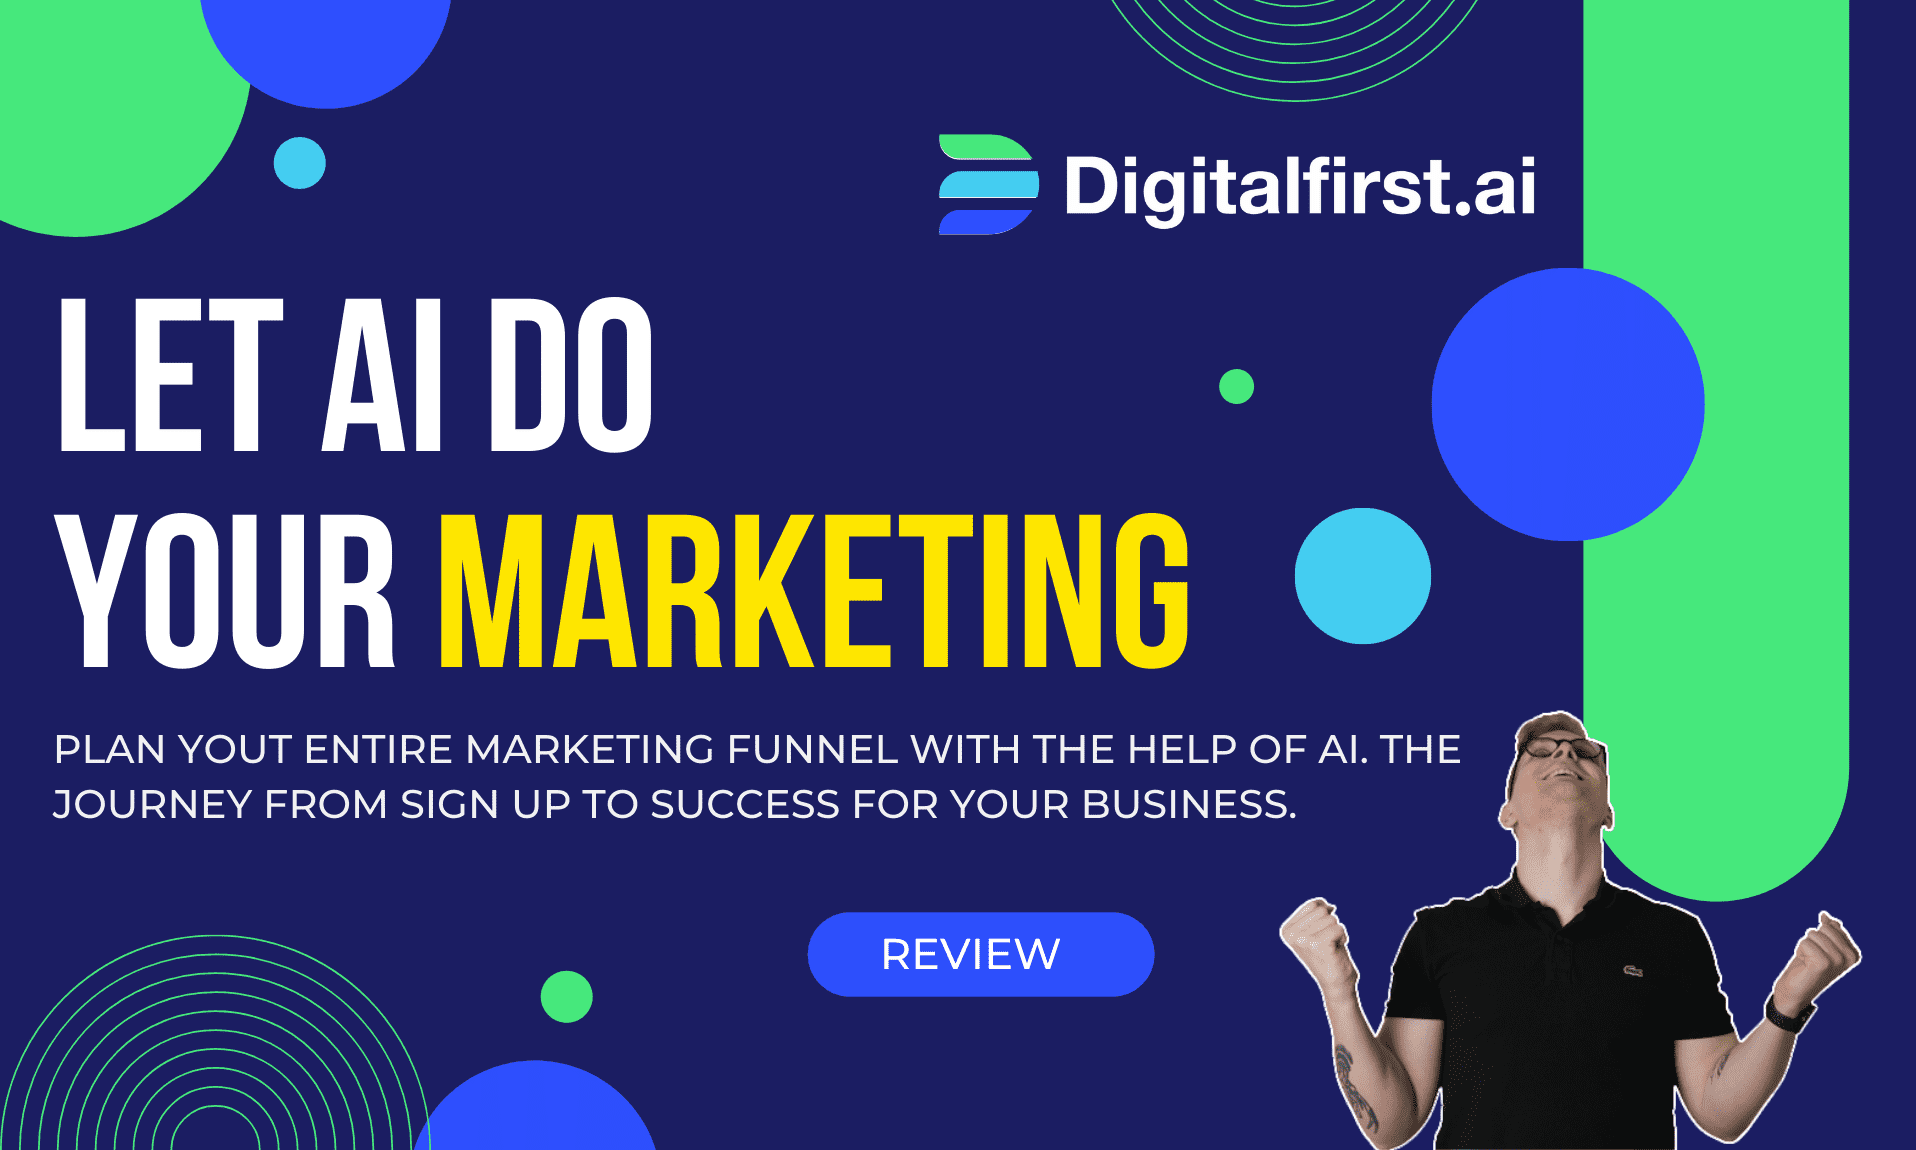 Digitalfirst.ai review - Utilise AI for your marketing plan